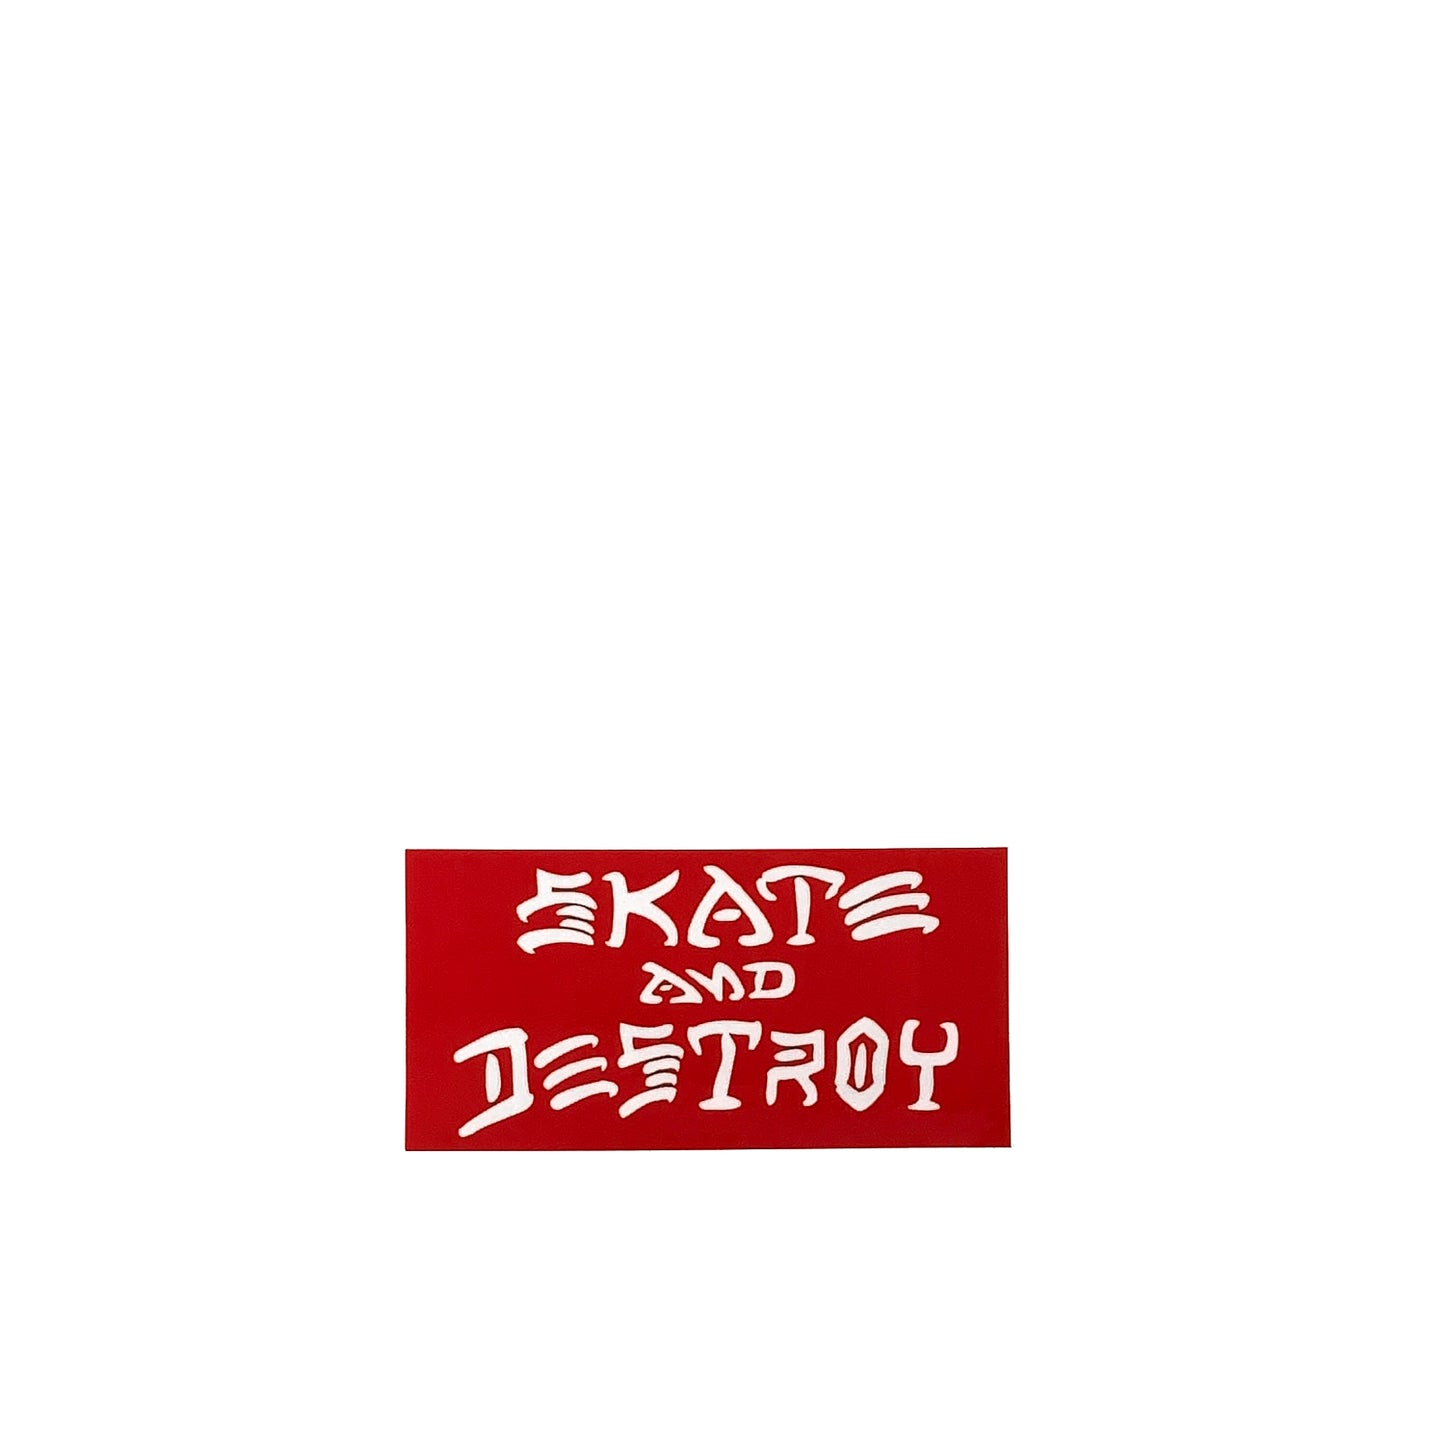 Thrasher Skate and Destroy Sticker - Red / White - Prime Delux Store